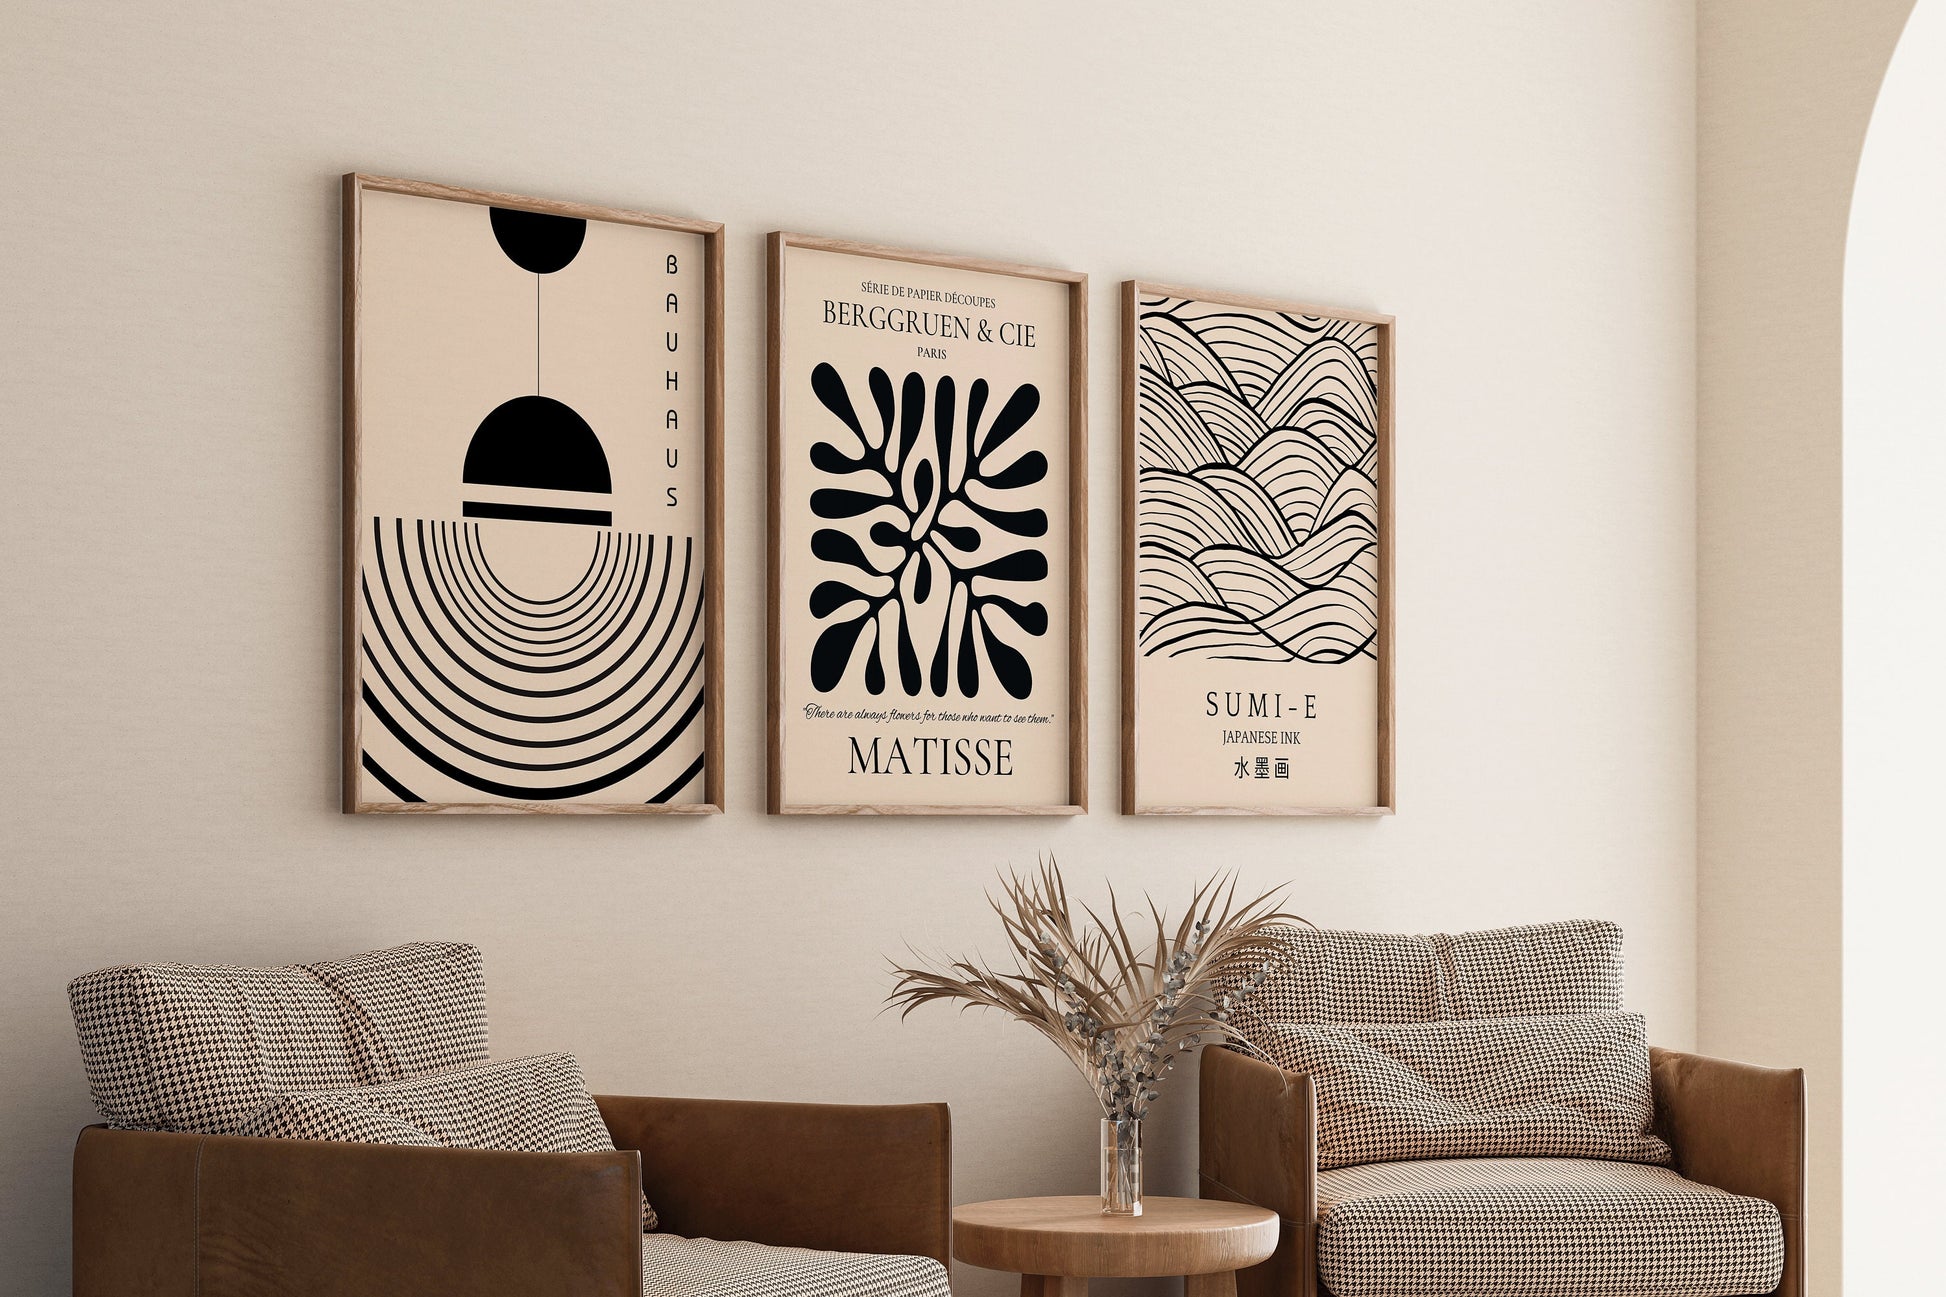 Matisse Bauhaus Set of 3 poster prints Japanese Ink Sumi-E Abstract Modern Art